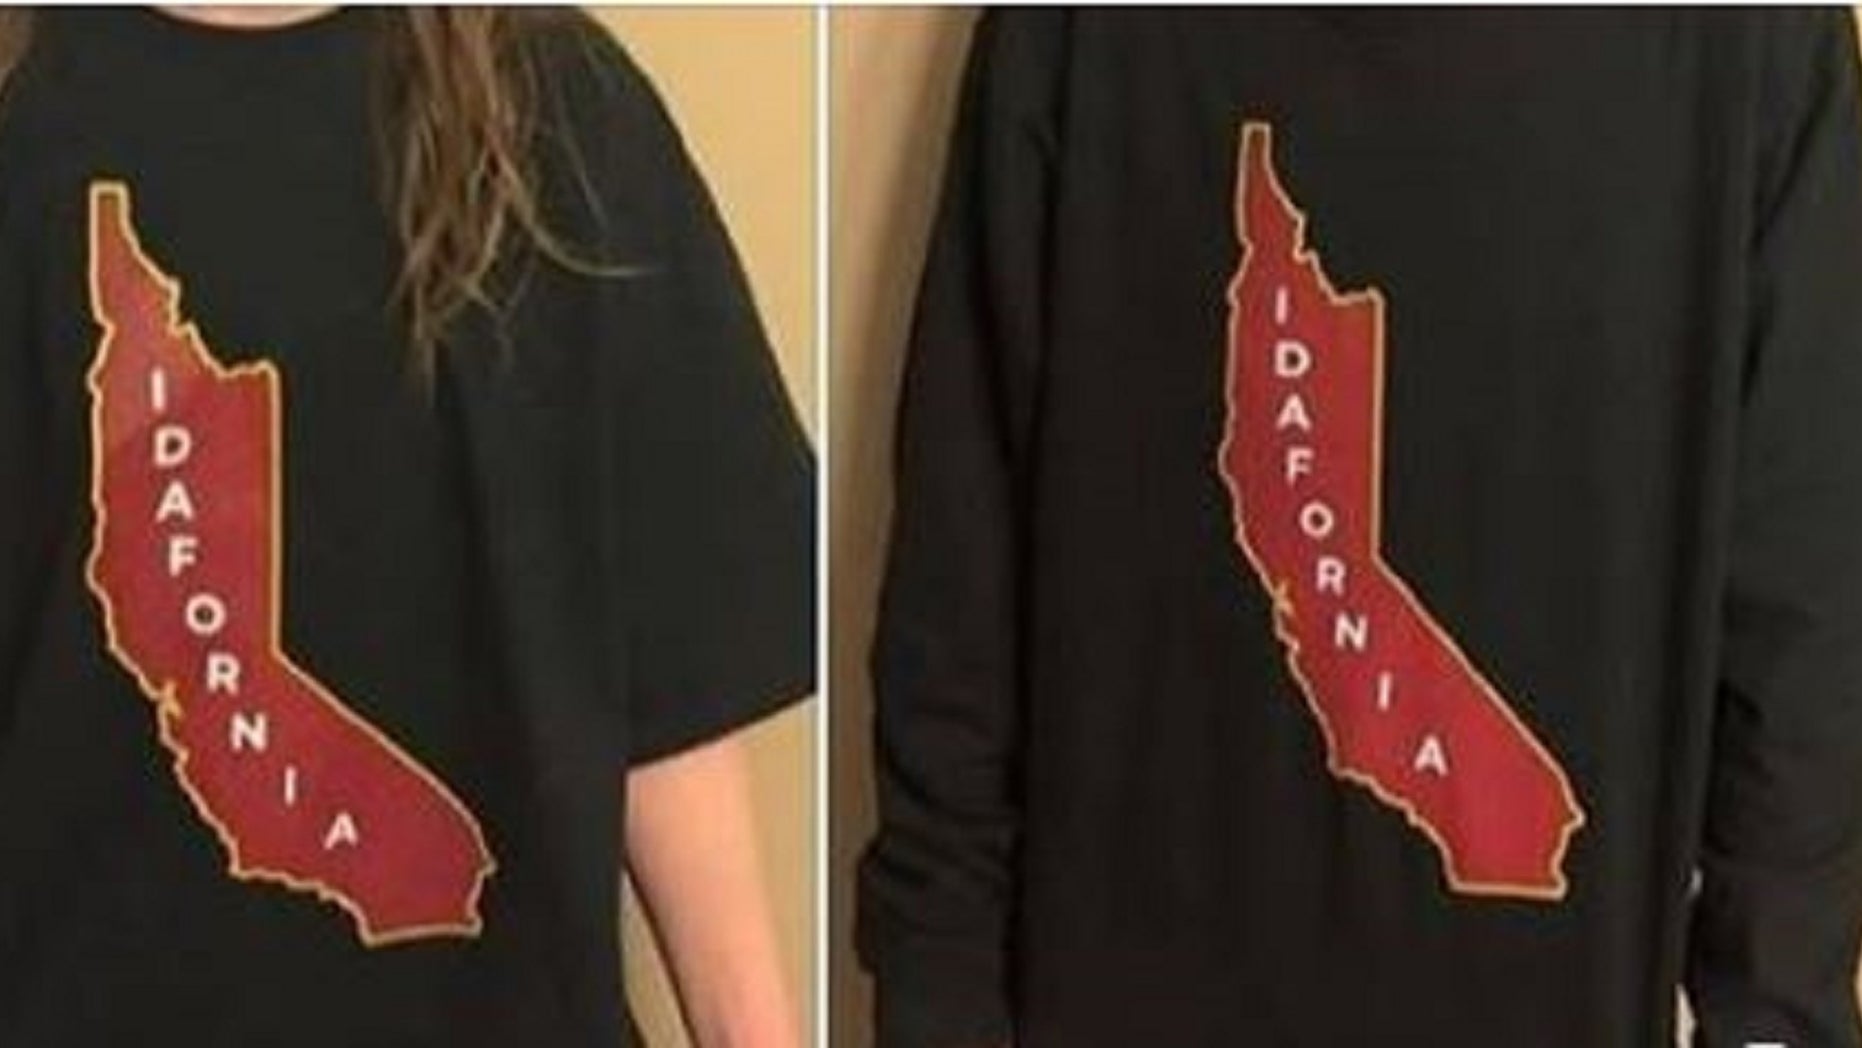 Shirts combining Idaho, California into 